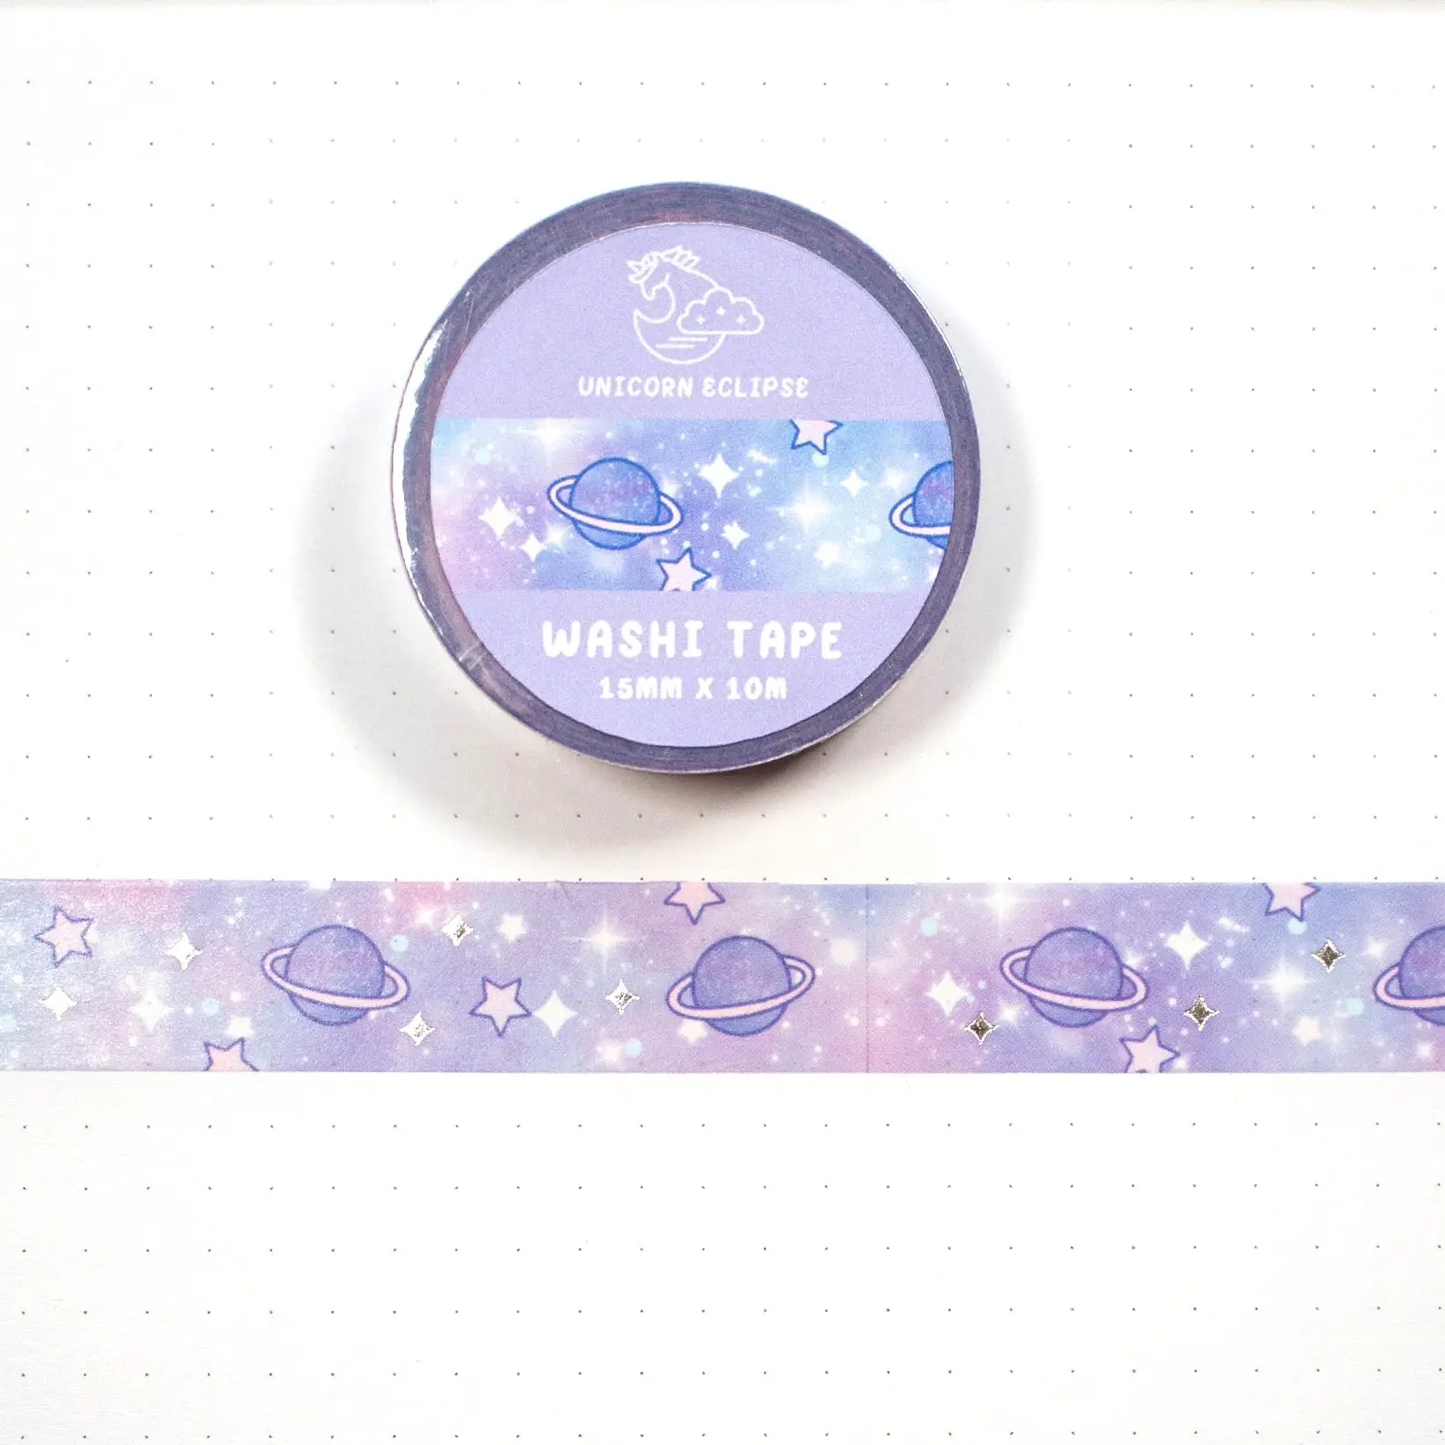 Unicorn Eclipse: "Blue Galaxy" silver foil washi tape